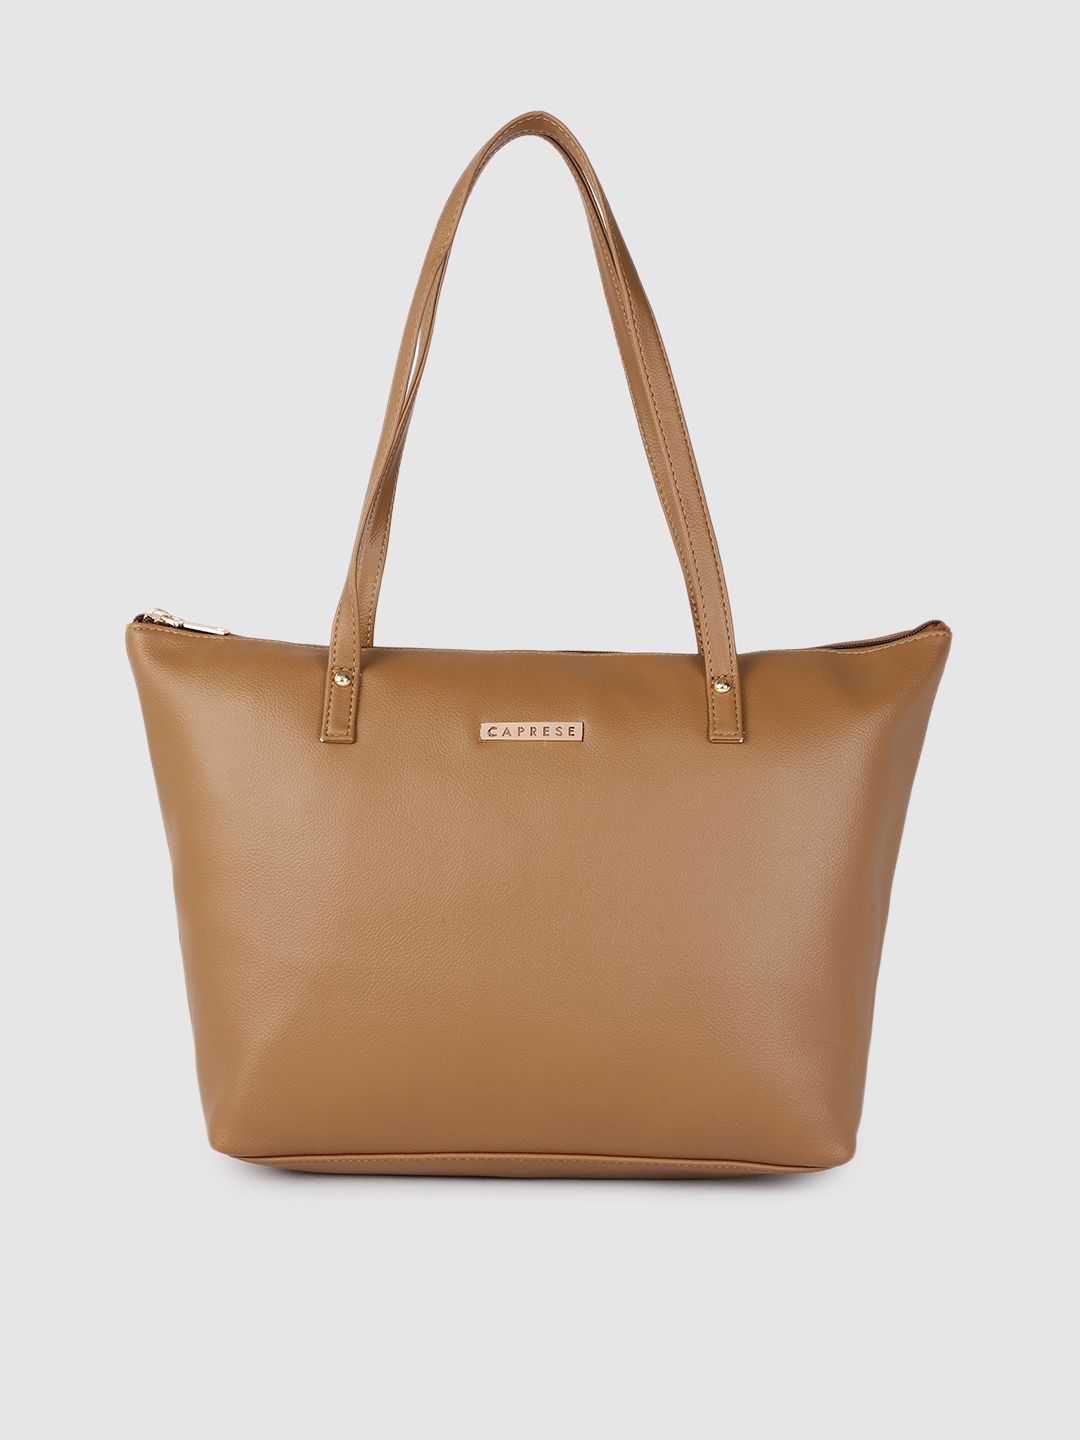 Caprese Brown Solid Structured Shoulder Bag Price in India